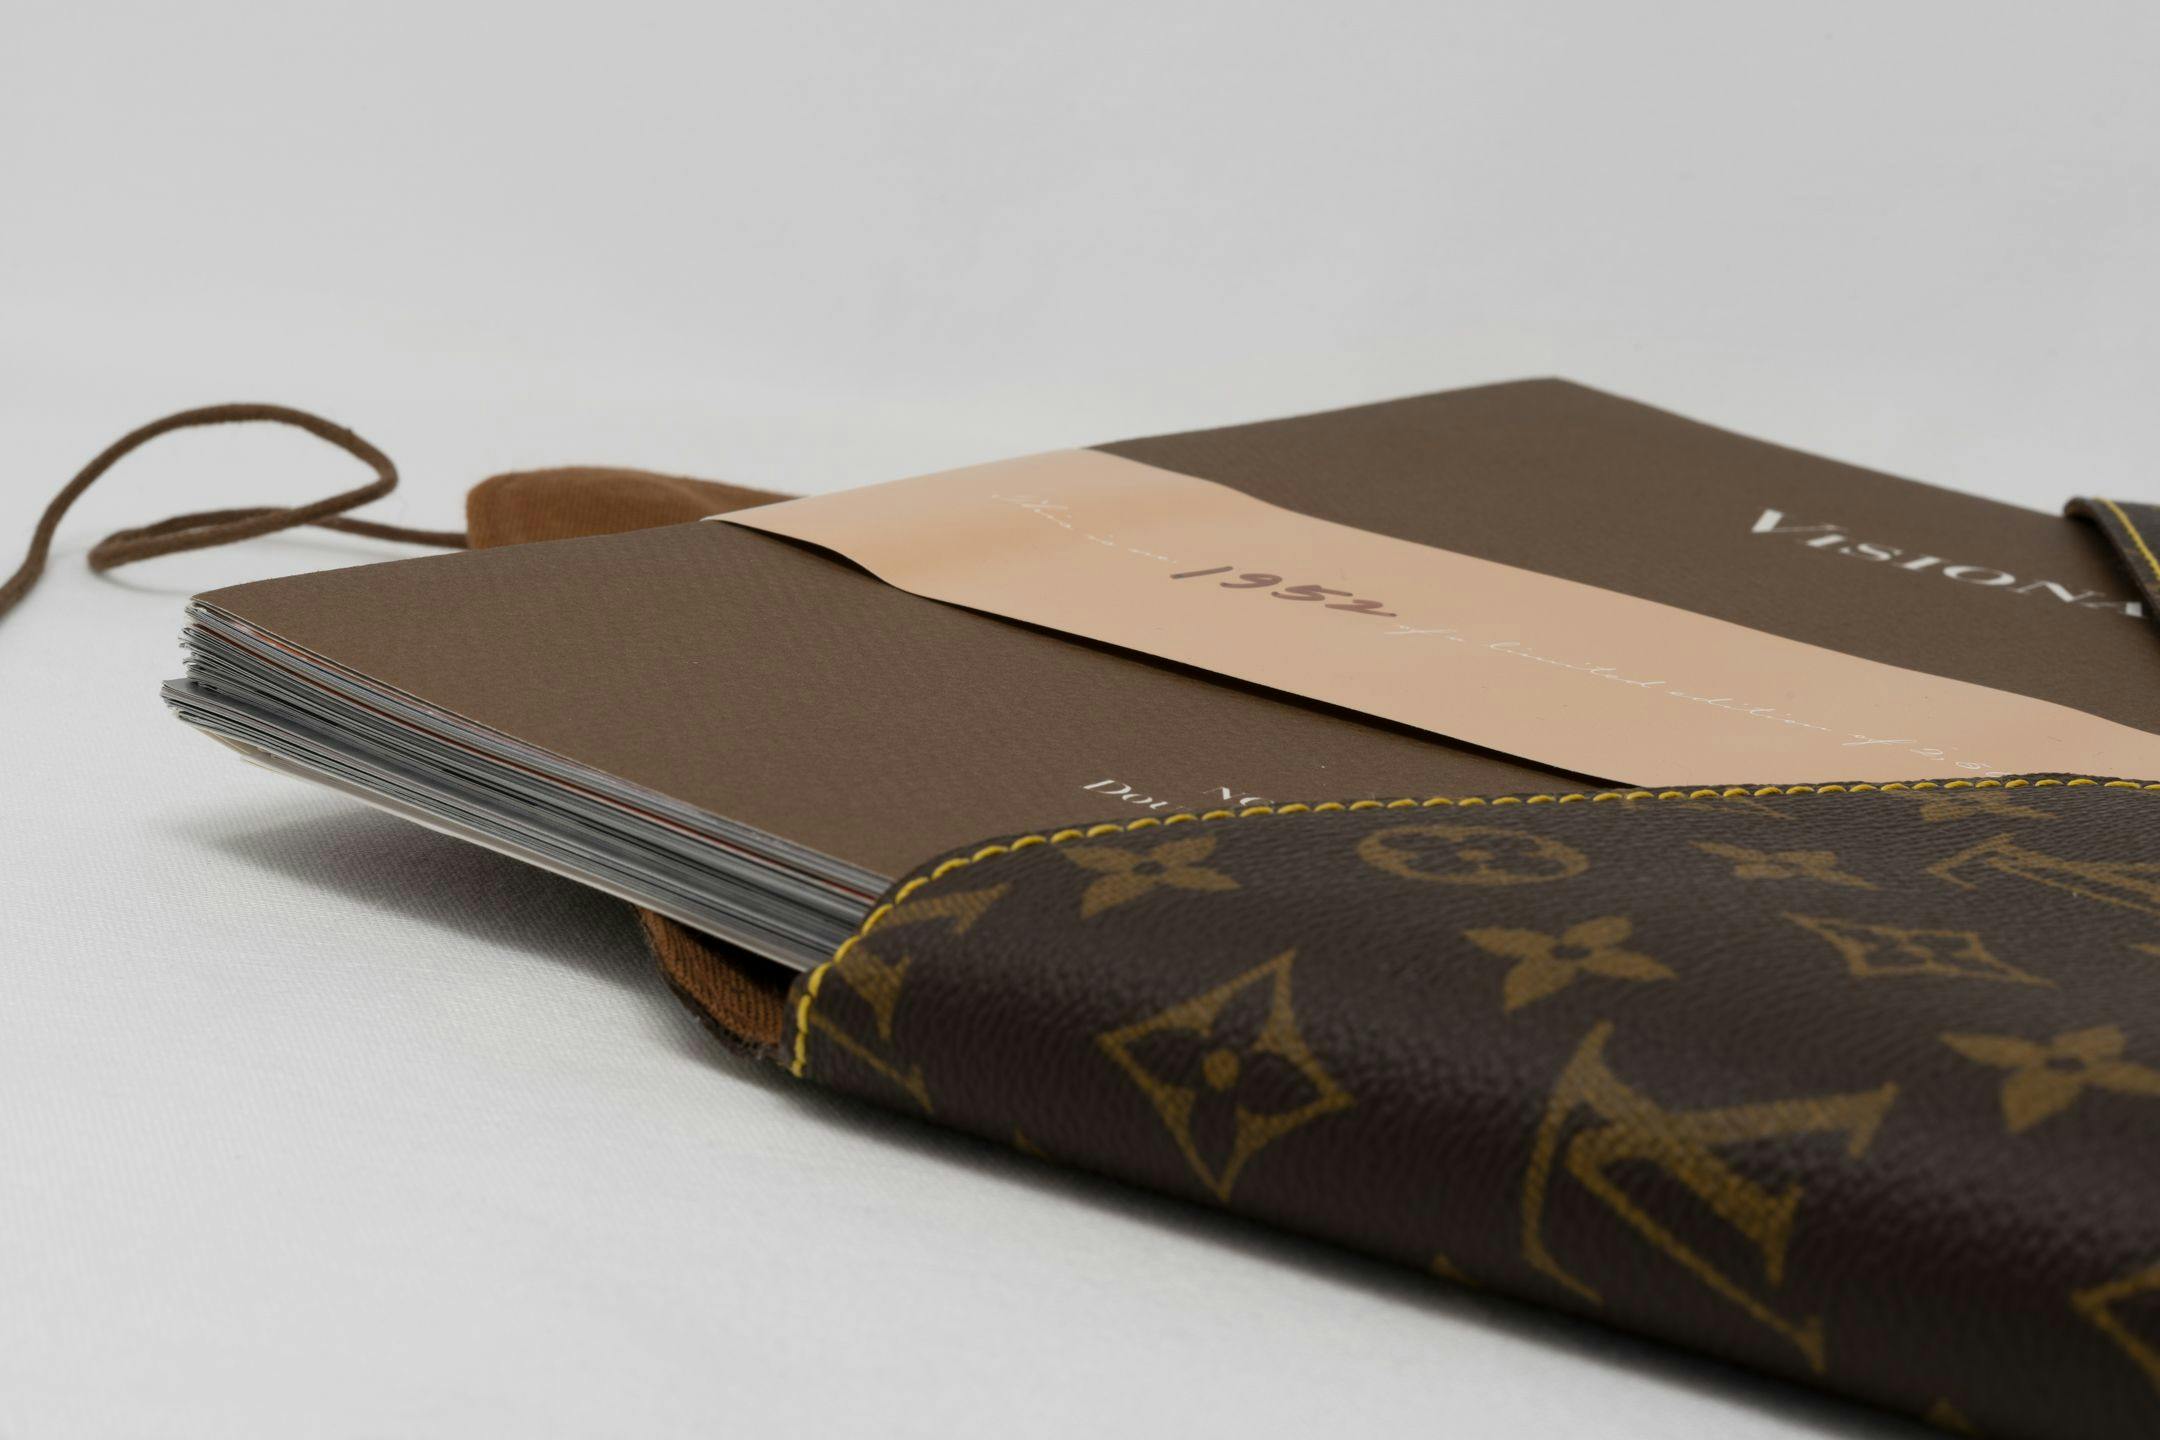 Brown Louis Vuitton x Visionaire Monogram 18 Fashion Special Book